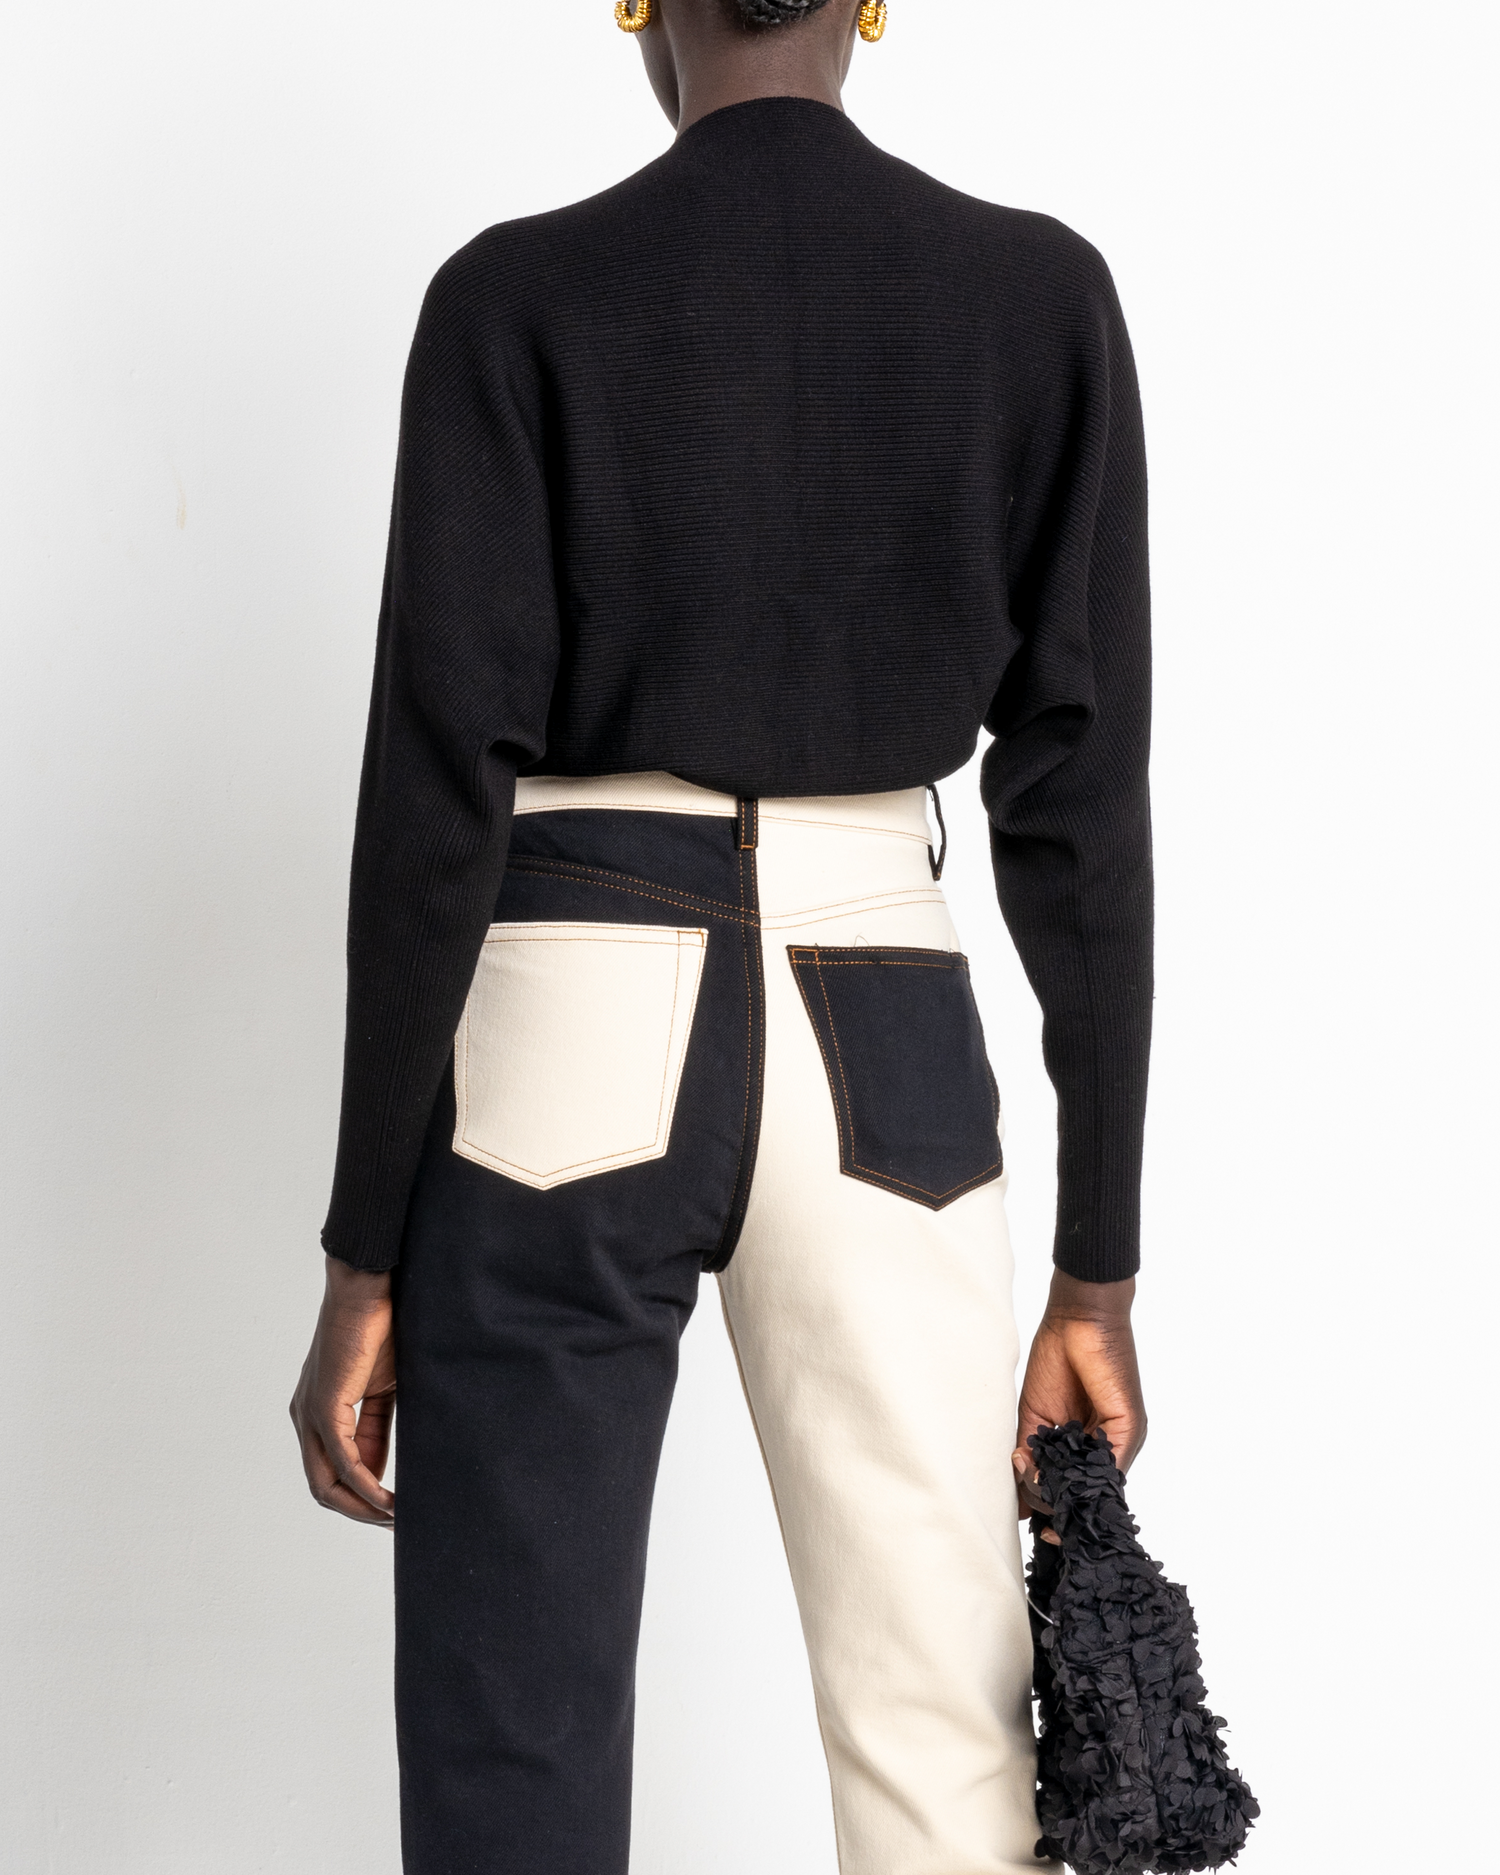 Second image of Naomi Cardi Set, a black top and cardi, knit, sweater tank, high neck, bolero, cardigan, sleeves, shrug